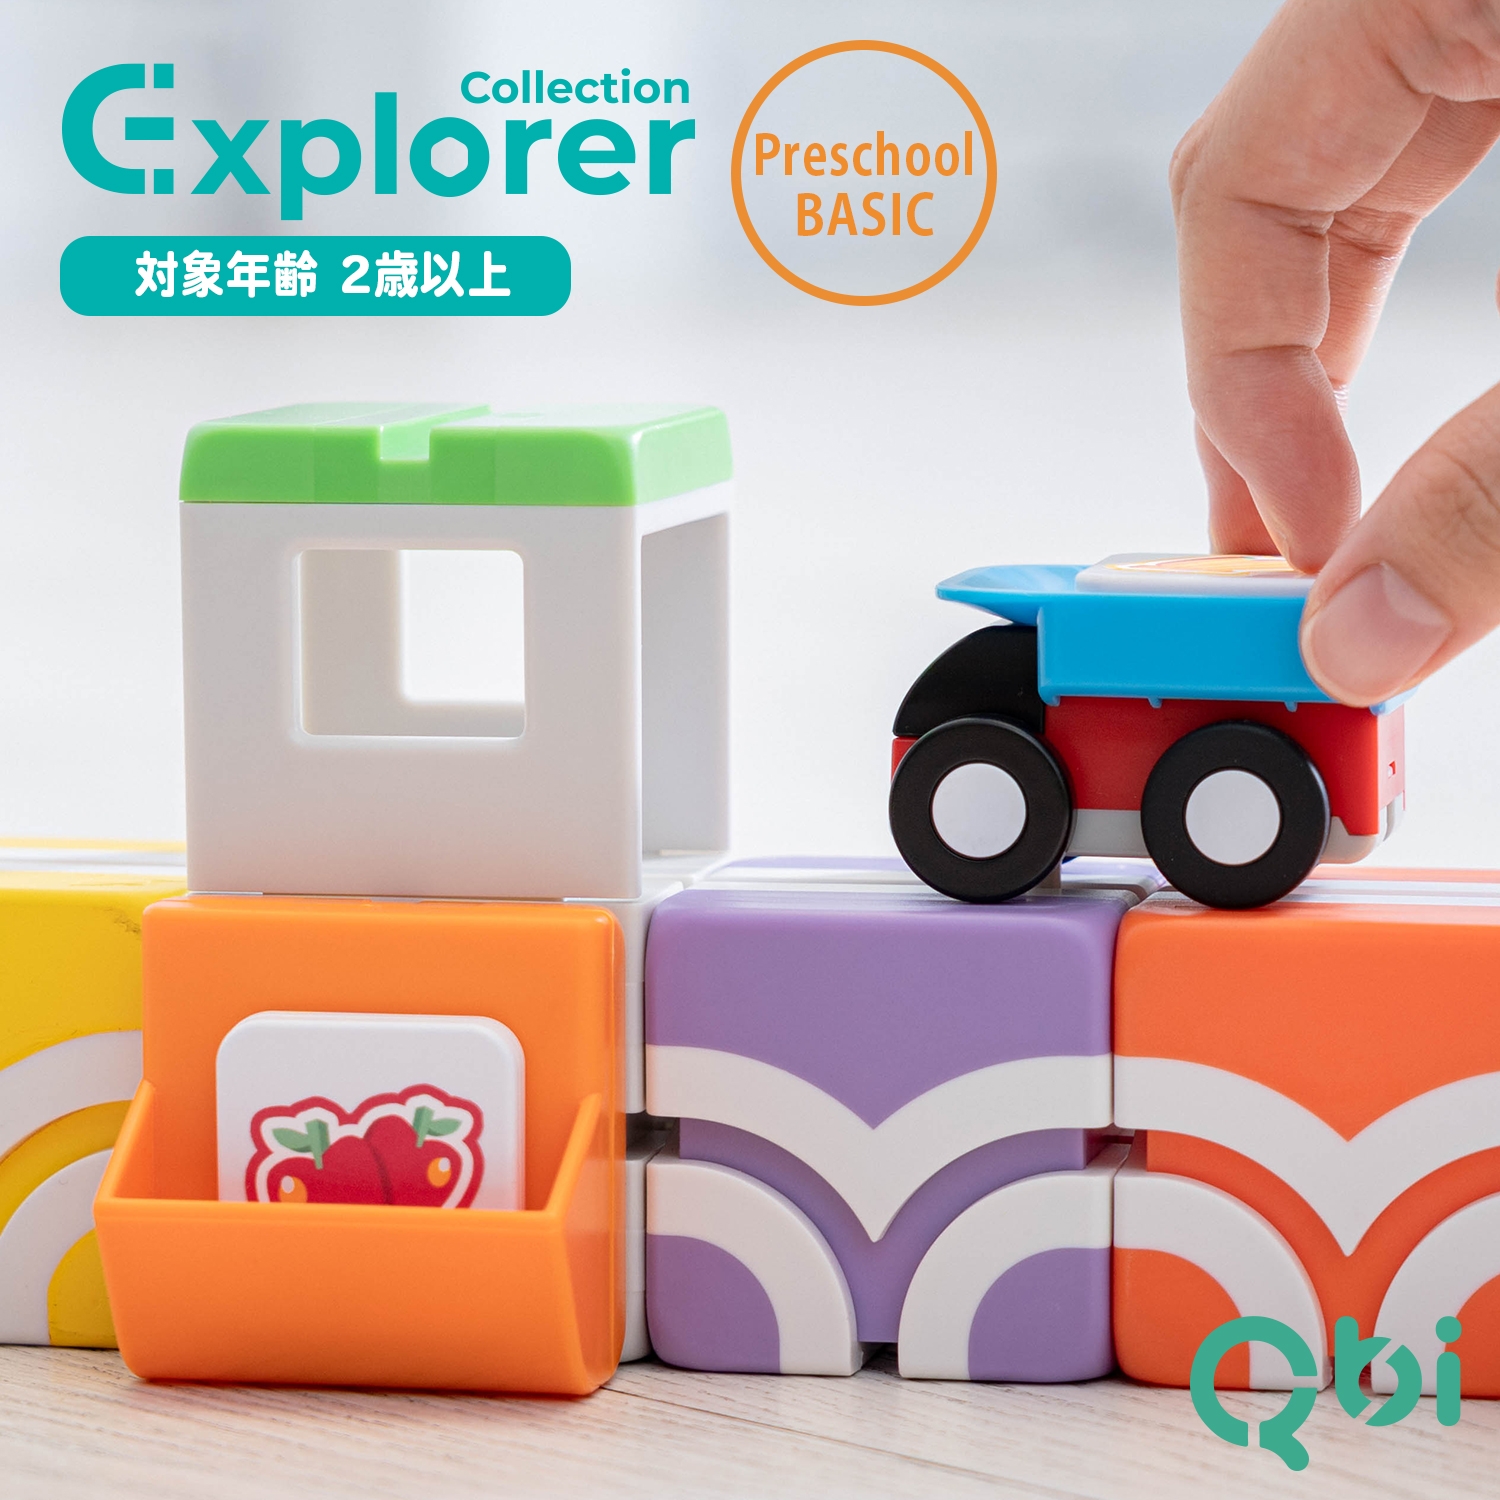 Qbi toy>Qbi Explorer Preschool BASIC | Giftpad egift